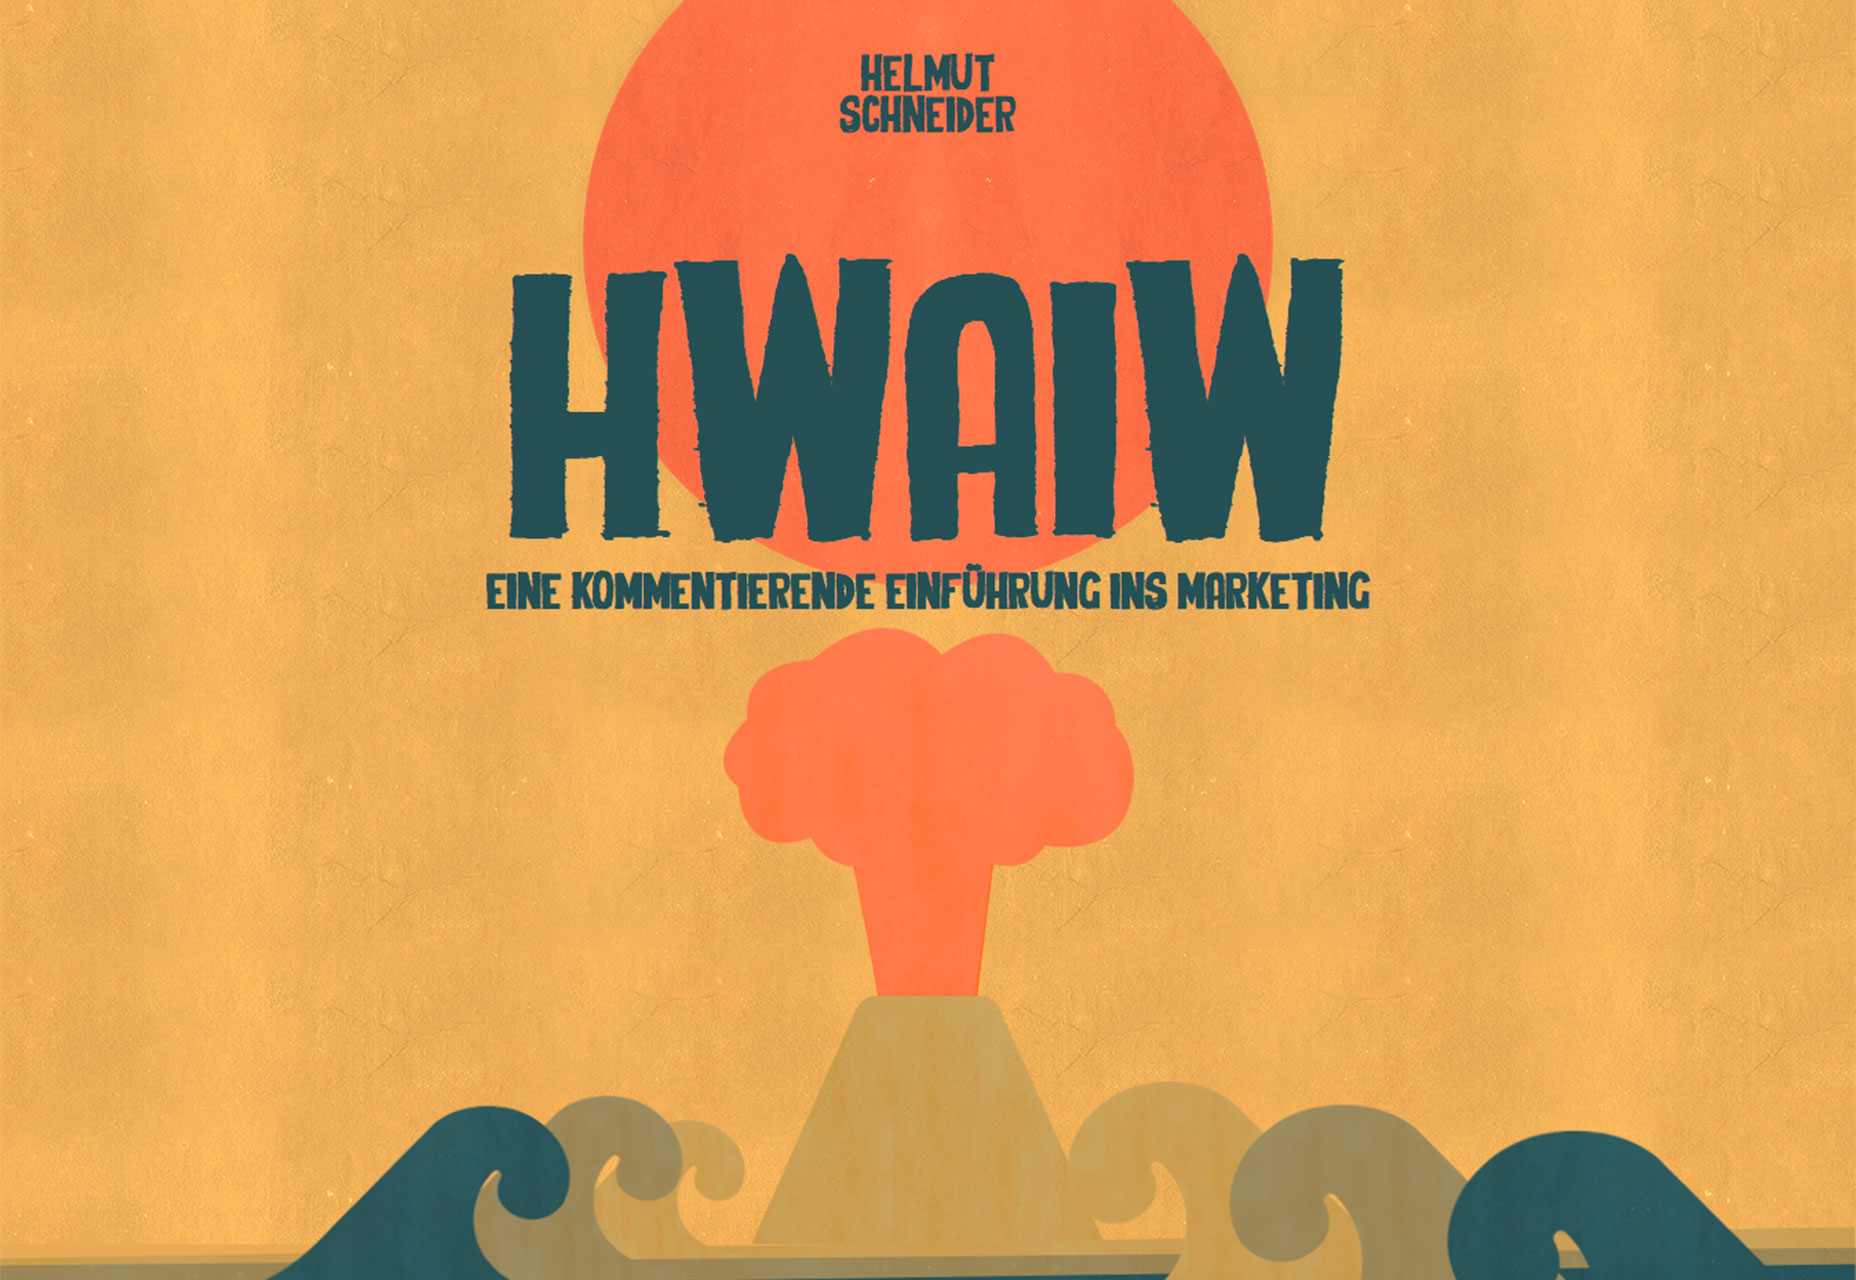 hwawi